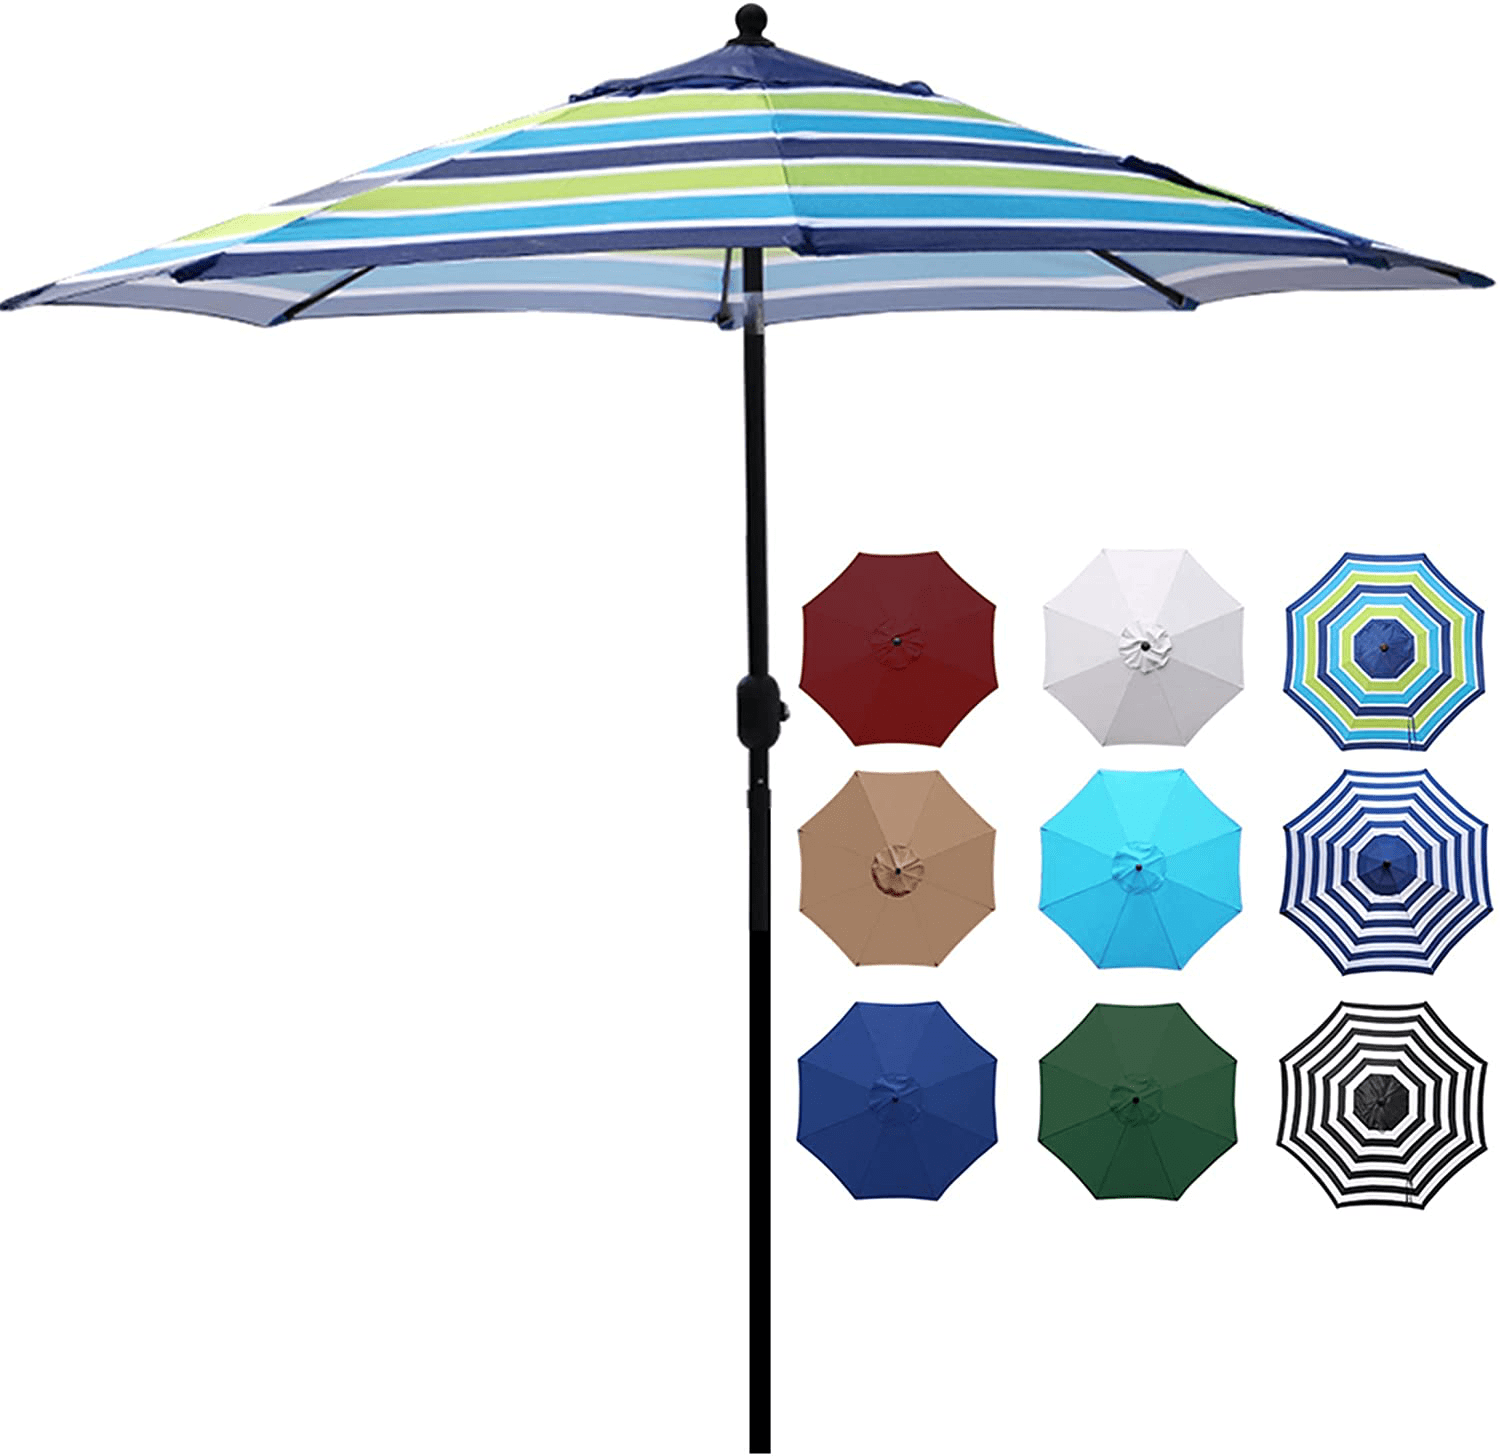 Blissun 9' Outdoor Market Patio Umbrella with Push Button Tilt and Crank 8 Ribs 